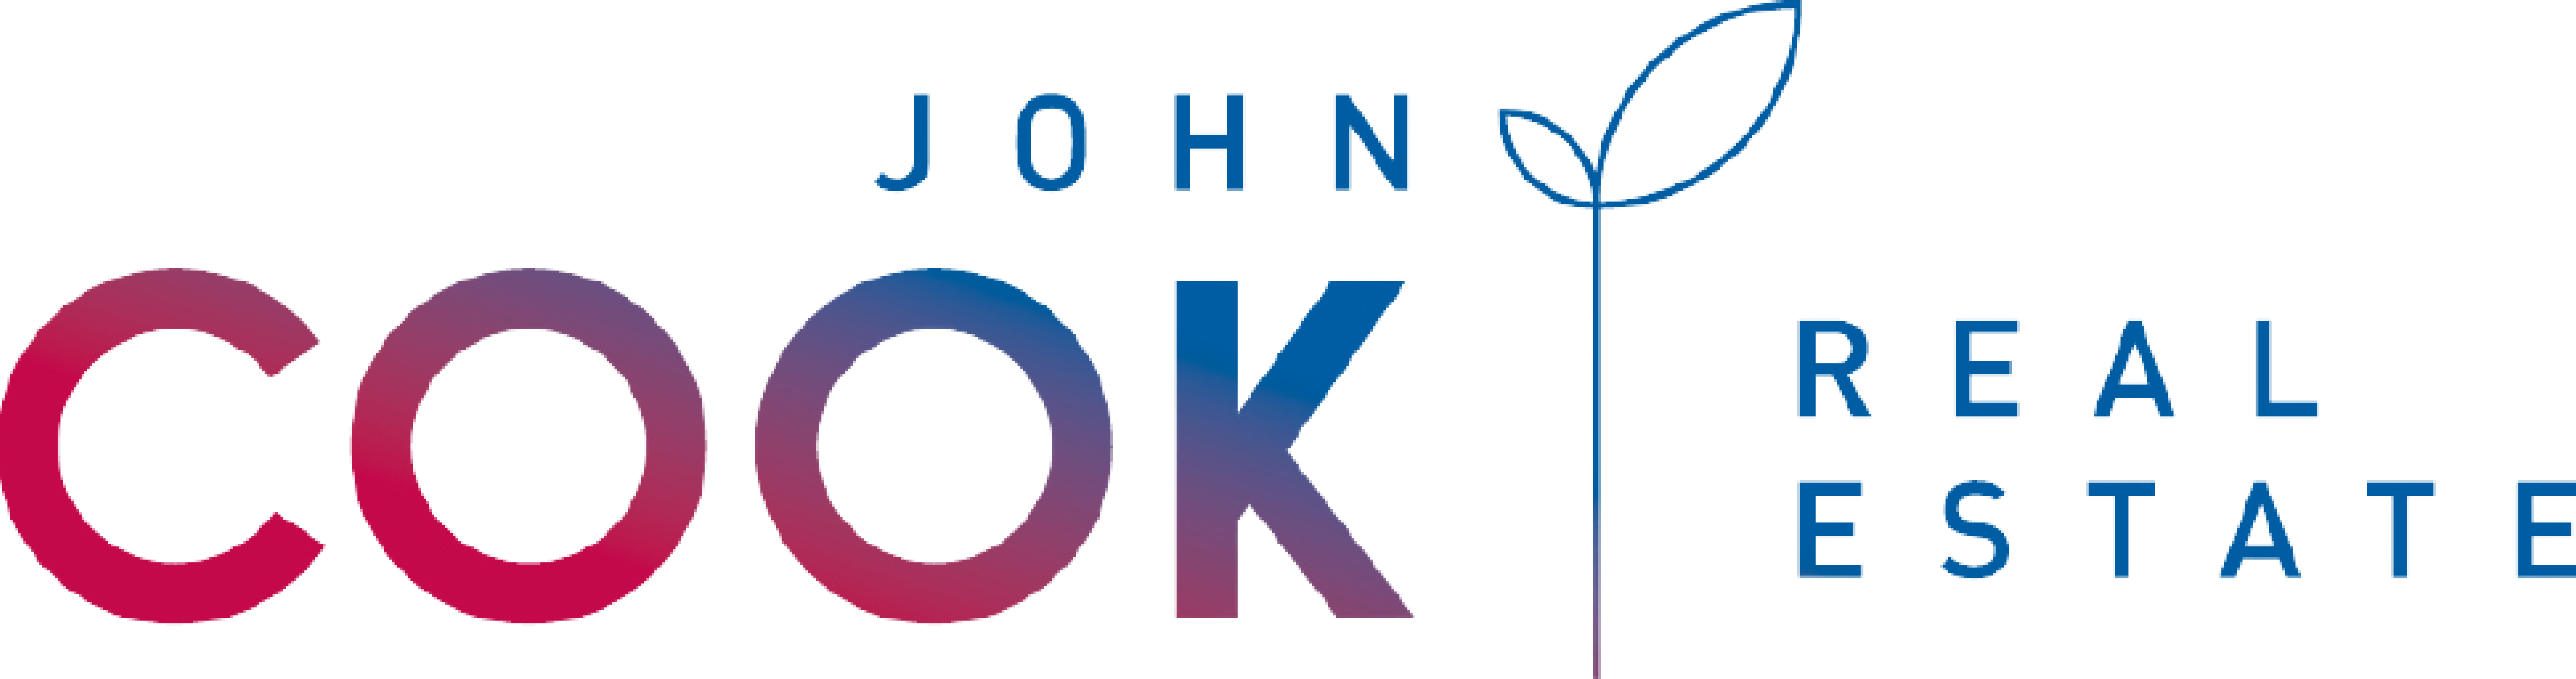 John Cook Real Estate